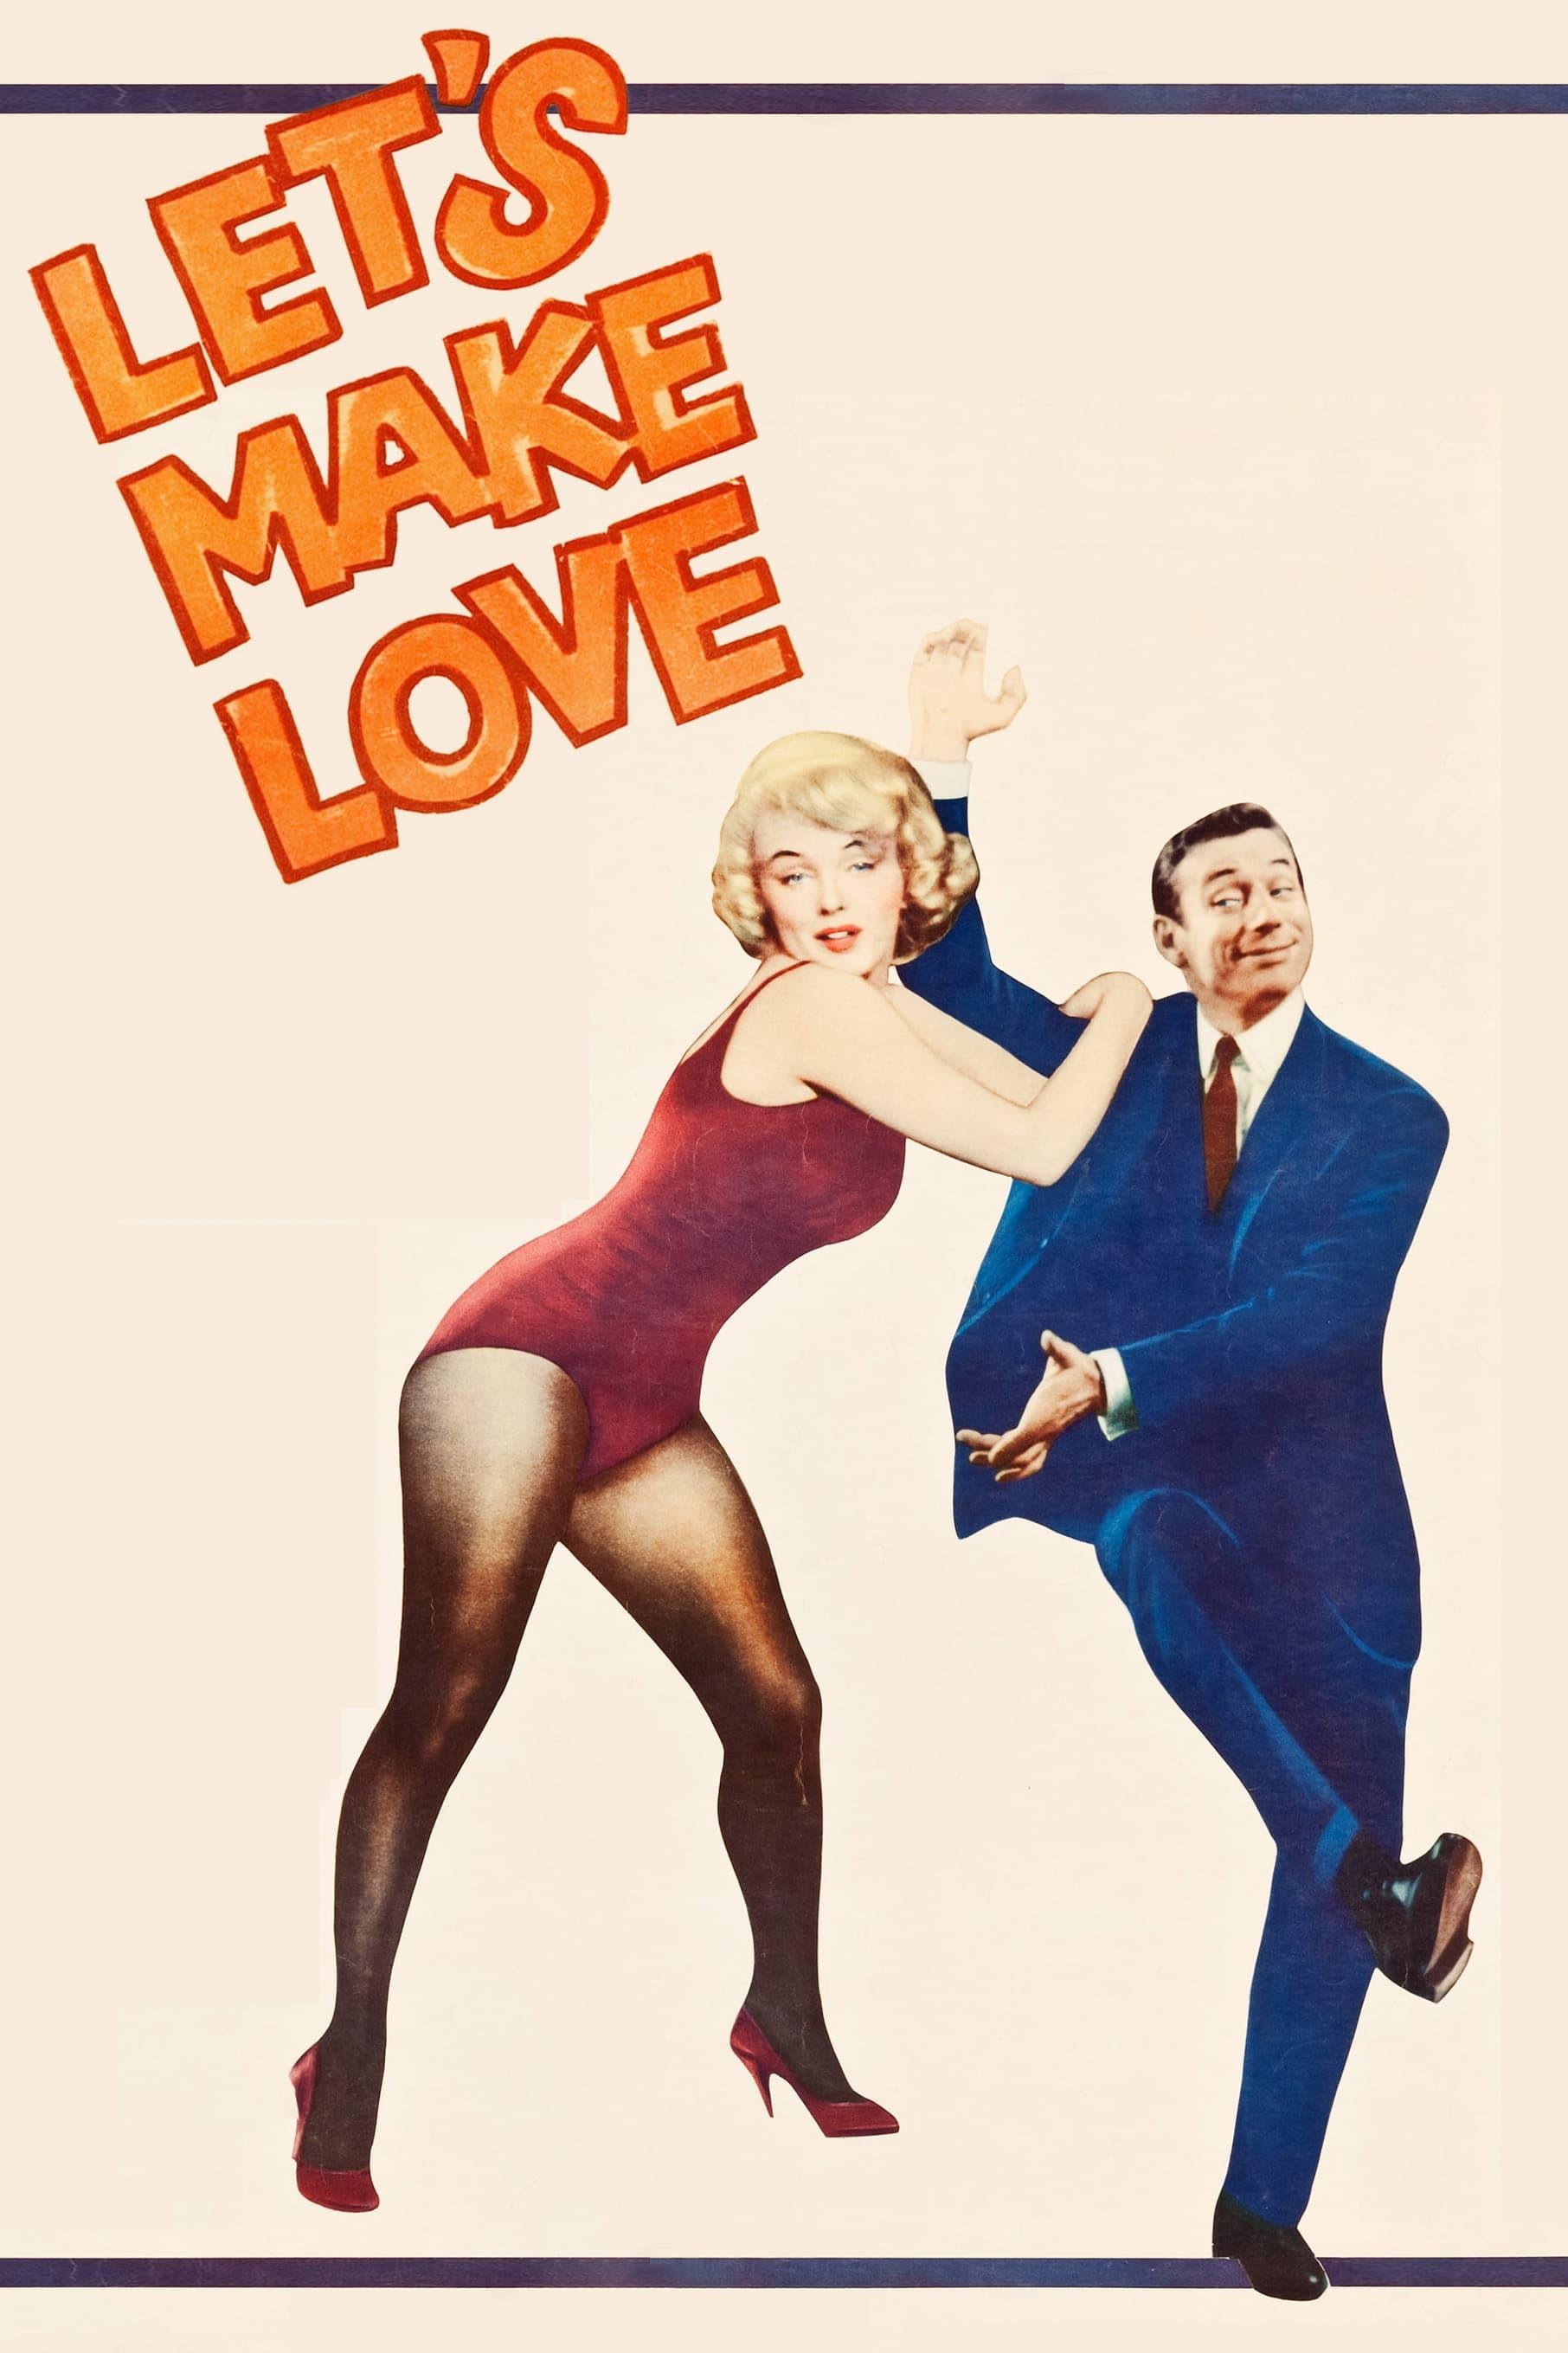 Let's Make Love poster